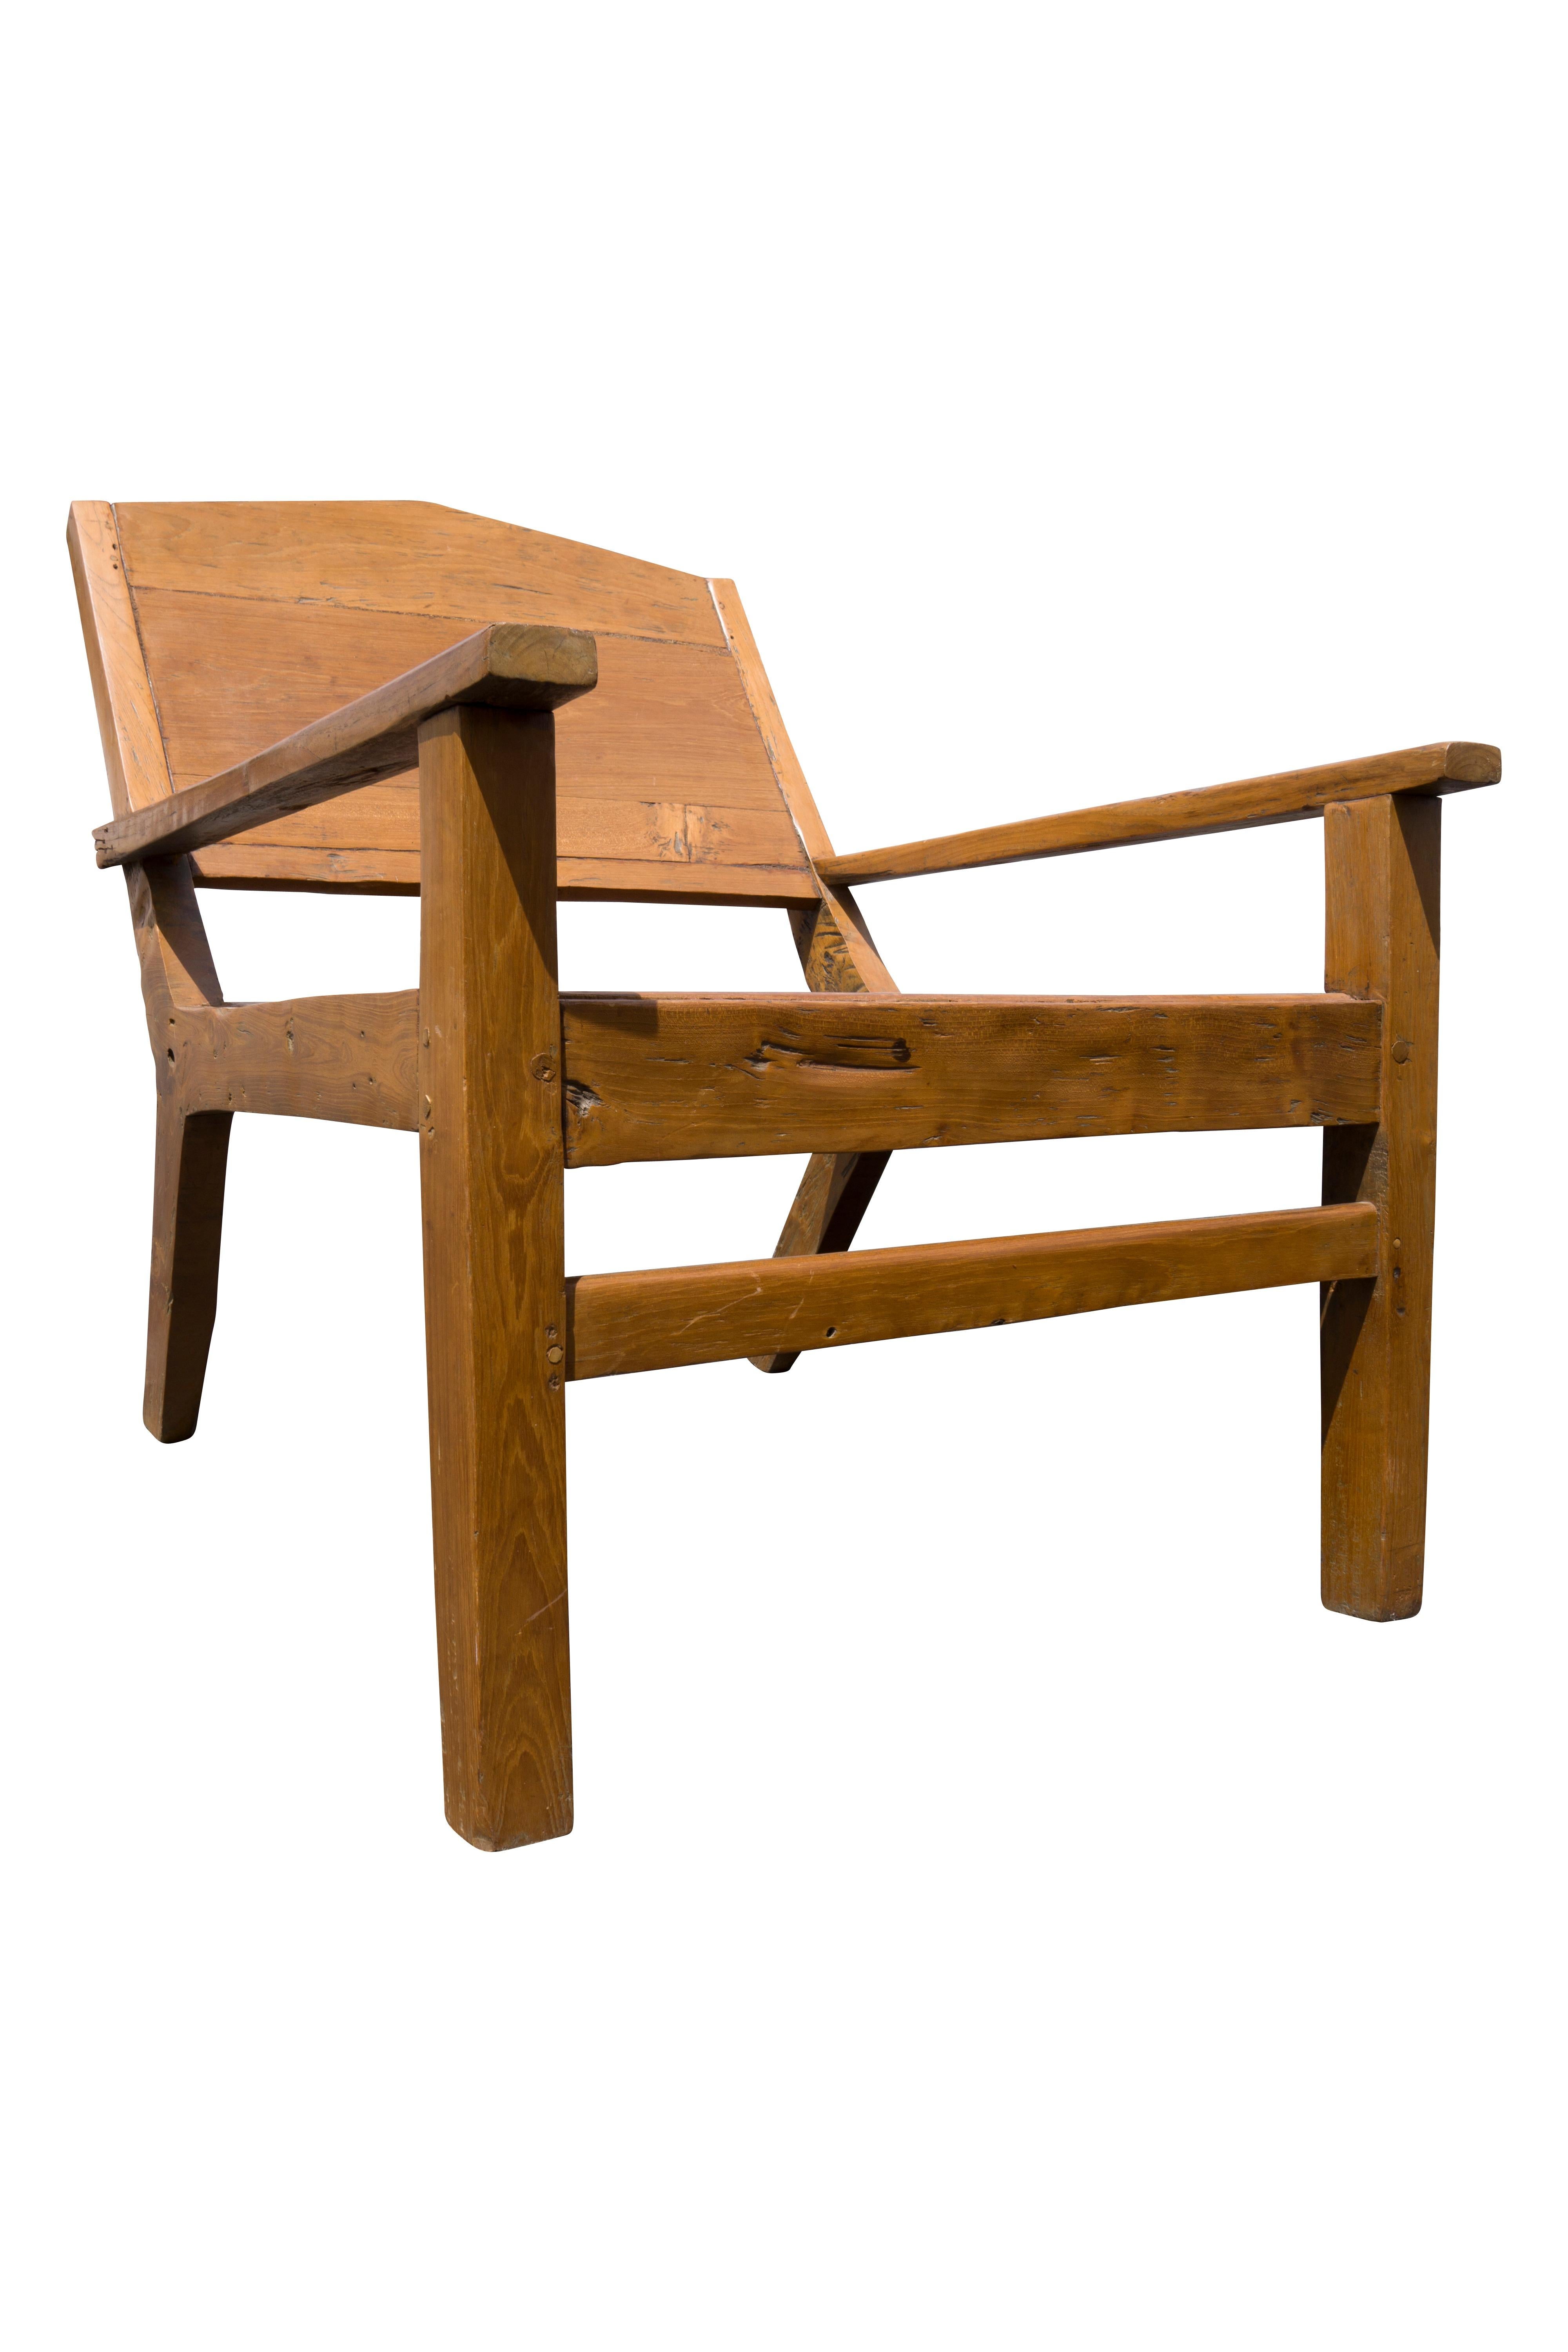 Hand-Carved Scandinavian Mid Century Modern Lounge Chair